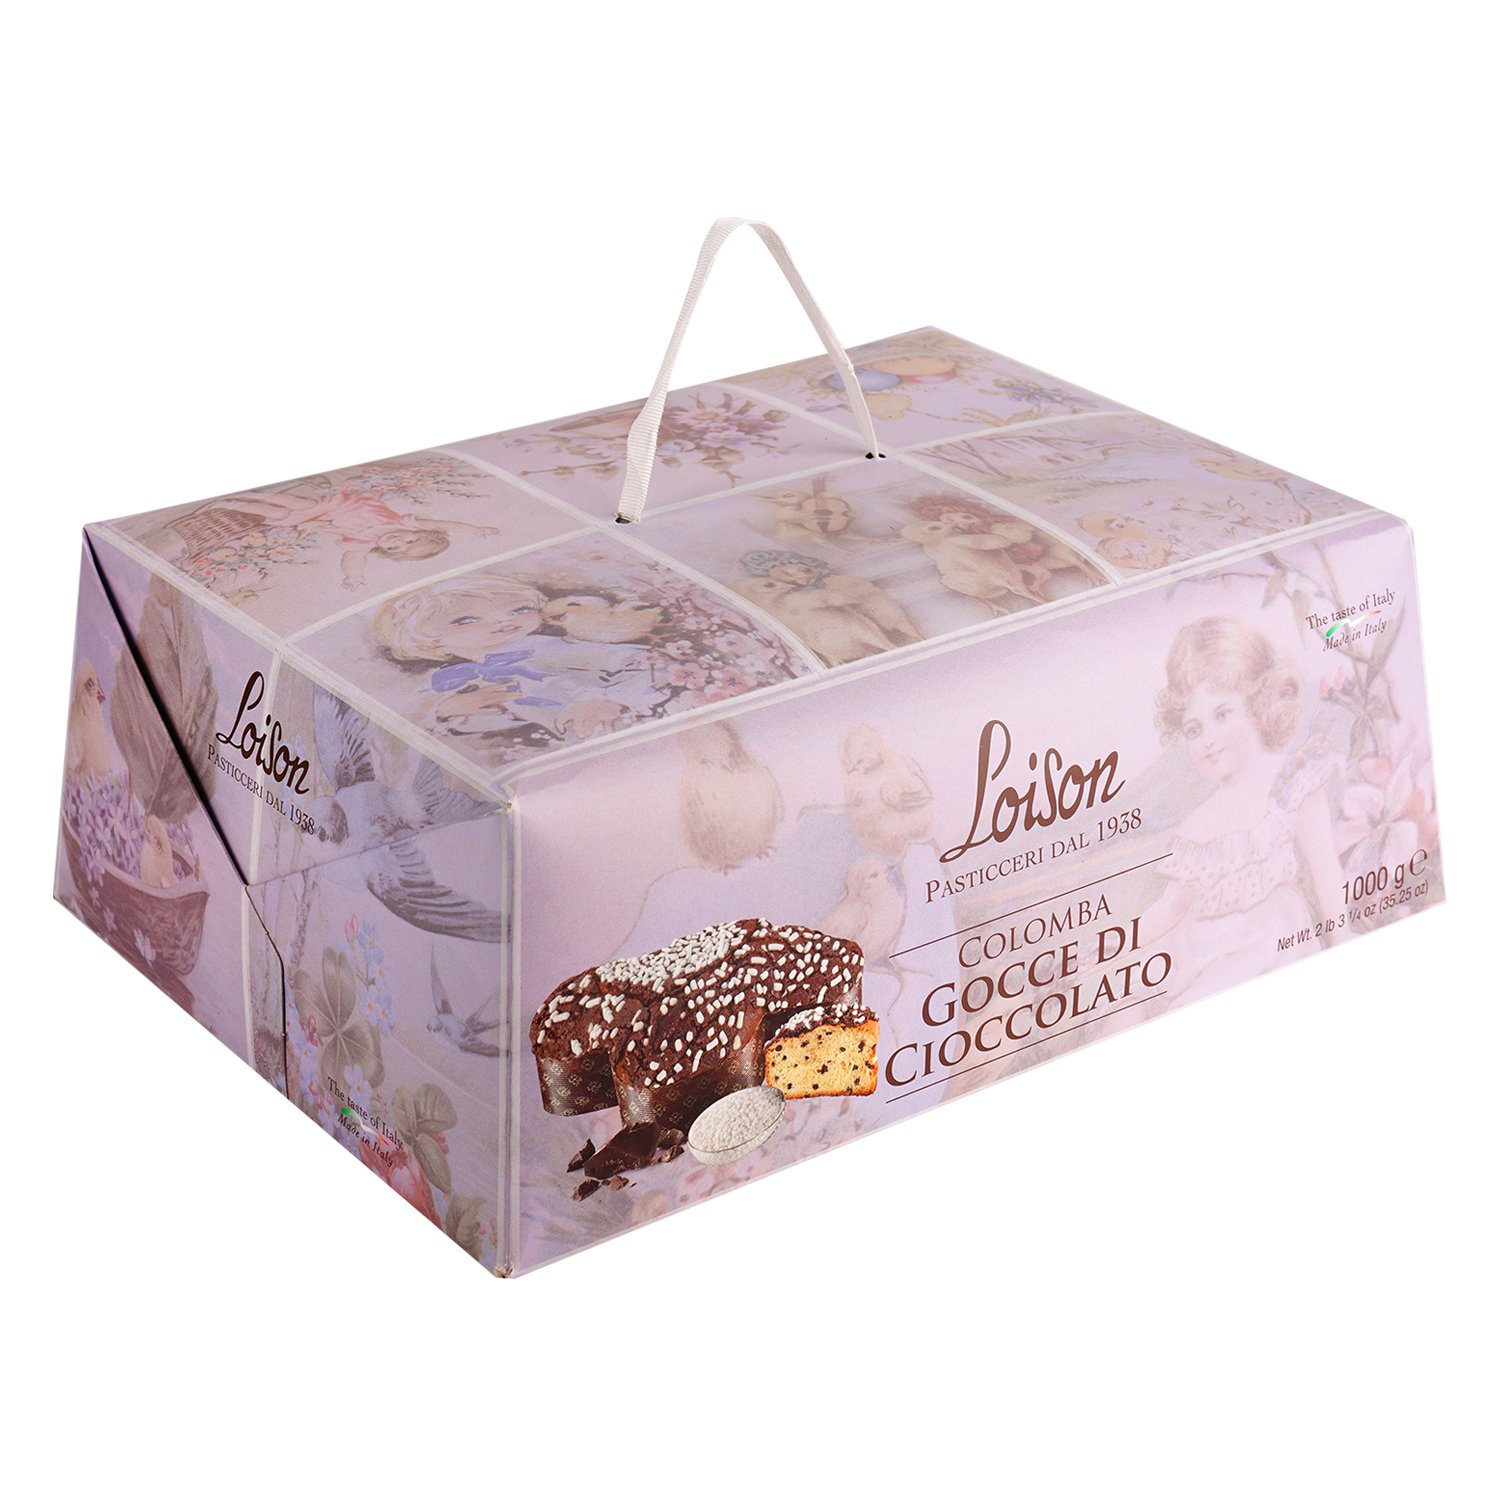 Коломба Loison La colomba Gocce Di Cioccolato с шоколадными каплями 1 кг (892424) - фото 1